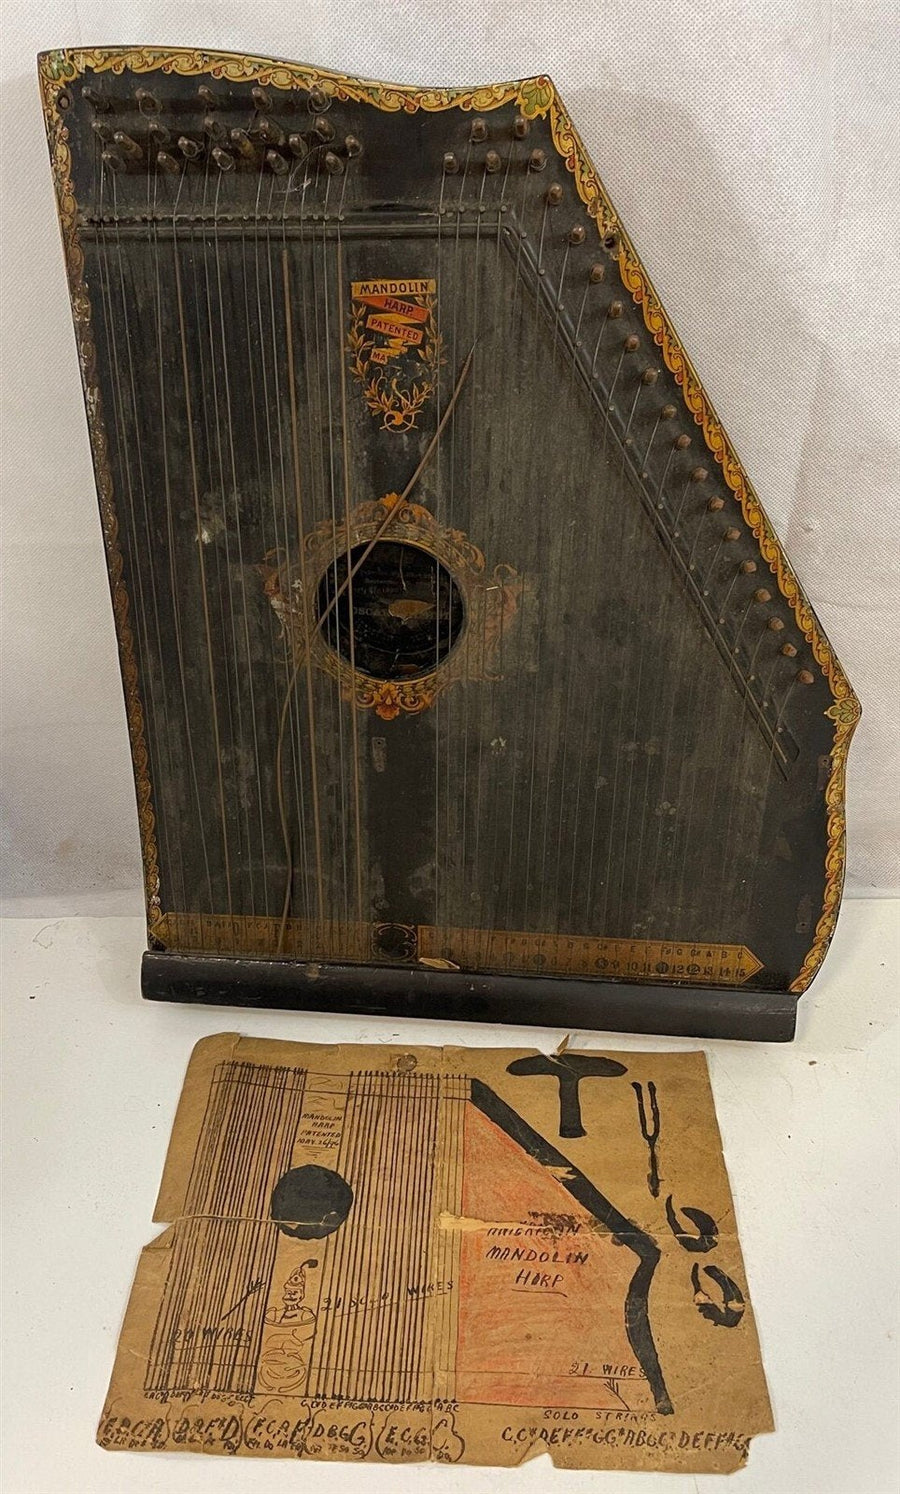 Vintage 1922 Mandolin Harp John Poole Pittsburg Pa w/ Original Paper